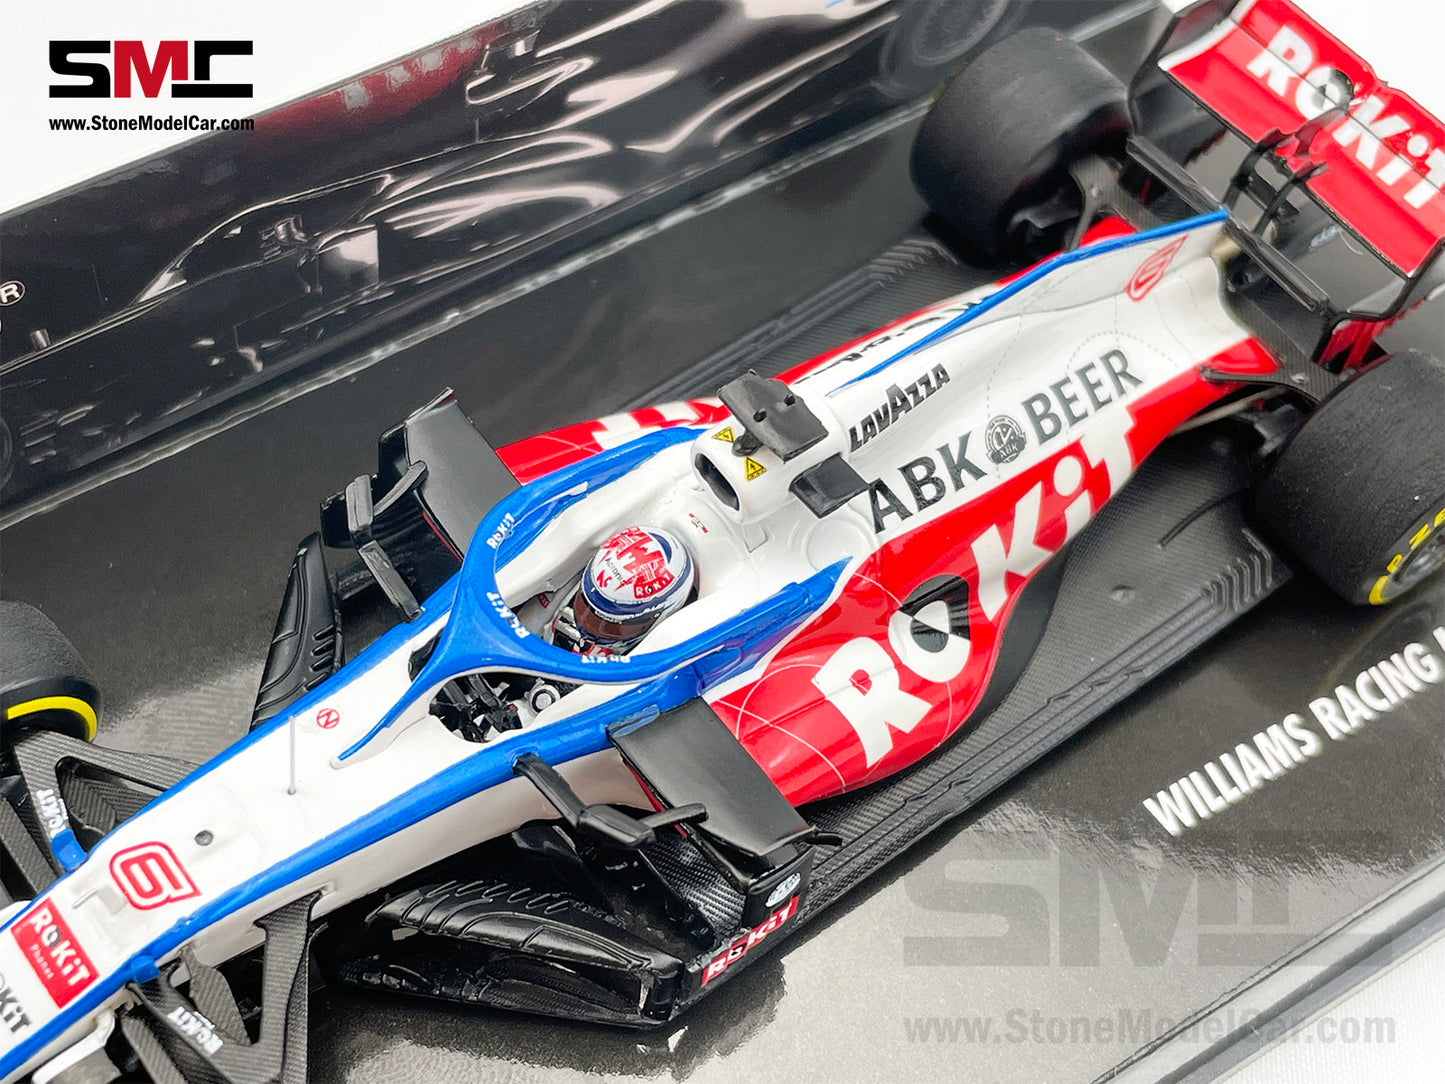 Williams F1 FW43 #6 Nicholas Latifi Launch Spec 2020 1:43 MINICHAMPS 417200006